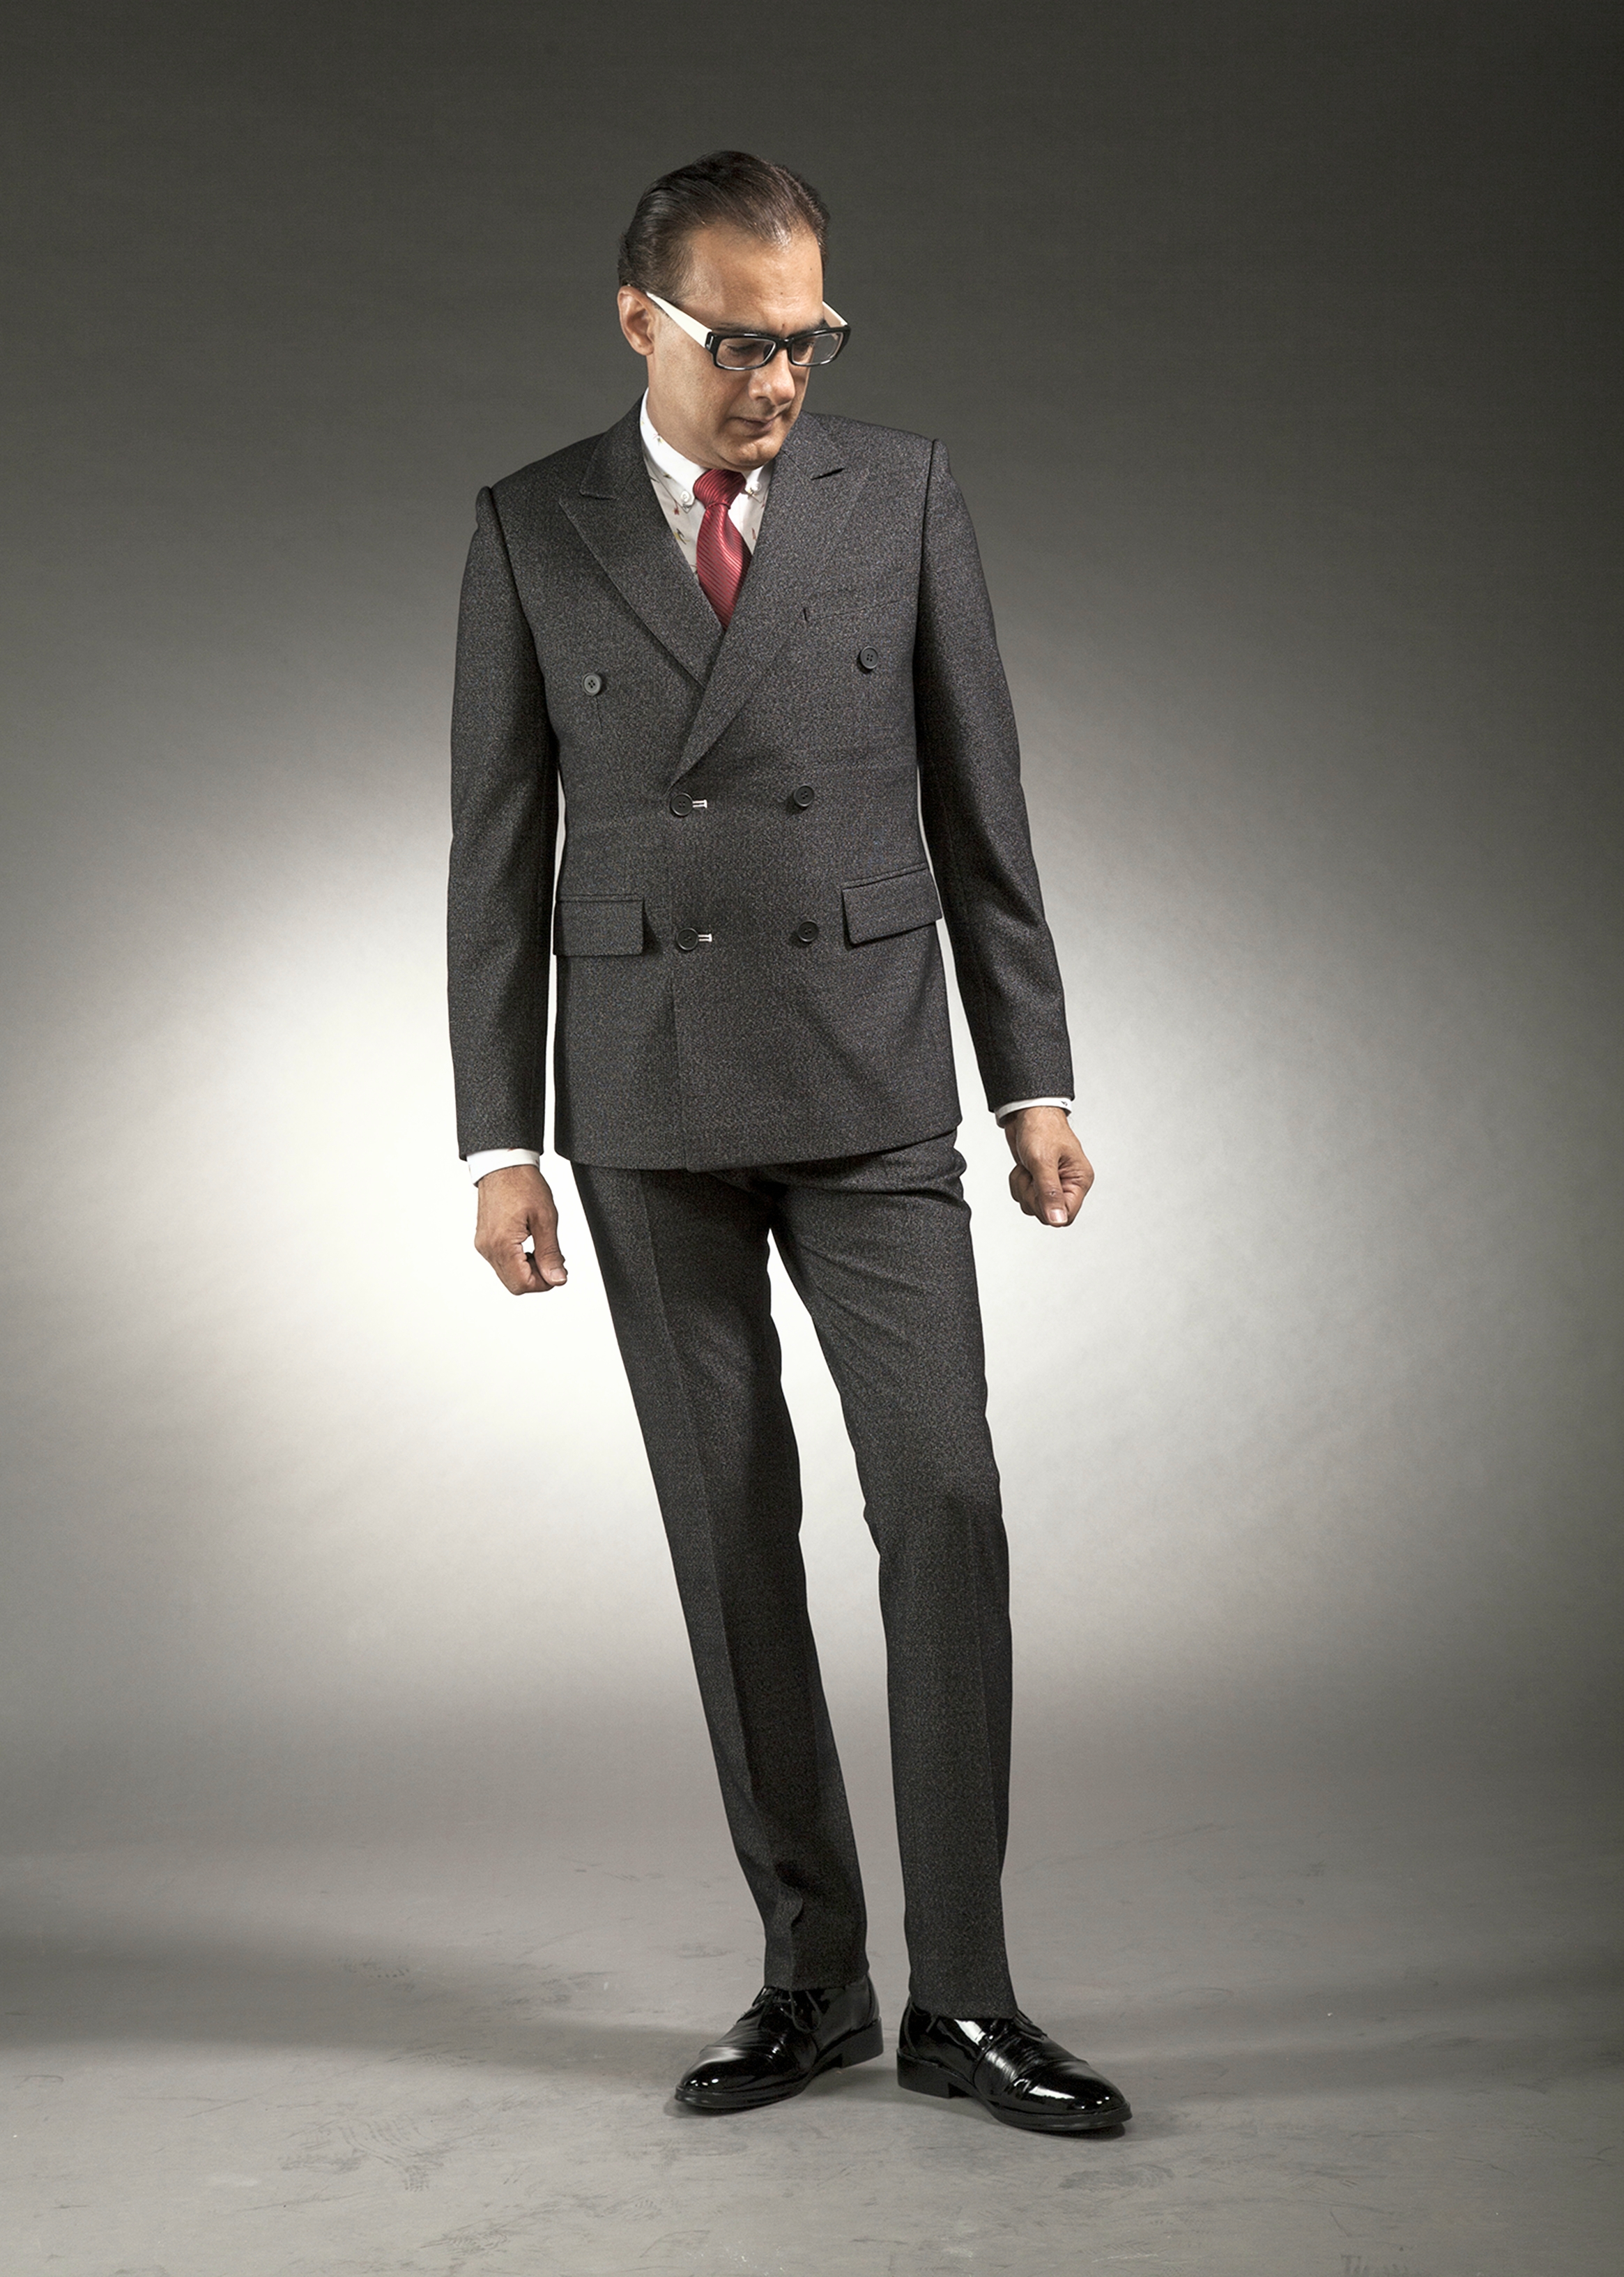 suit-rental-suits-rent-hire-designer-my-singapore-tailor-tailors-rentals-shop-tuxedo-black-tie-wedding-formal-27